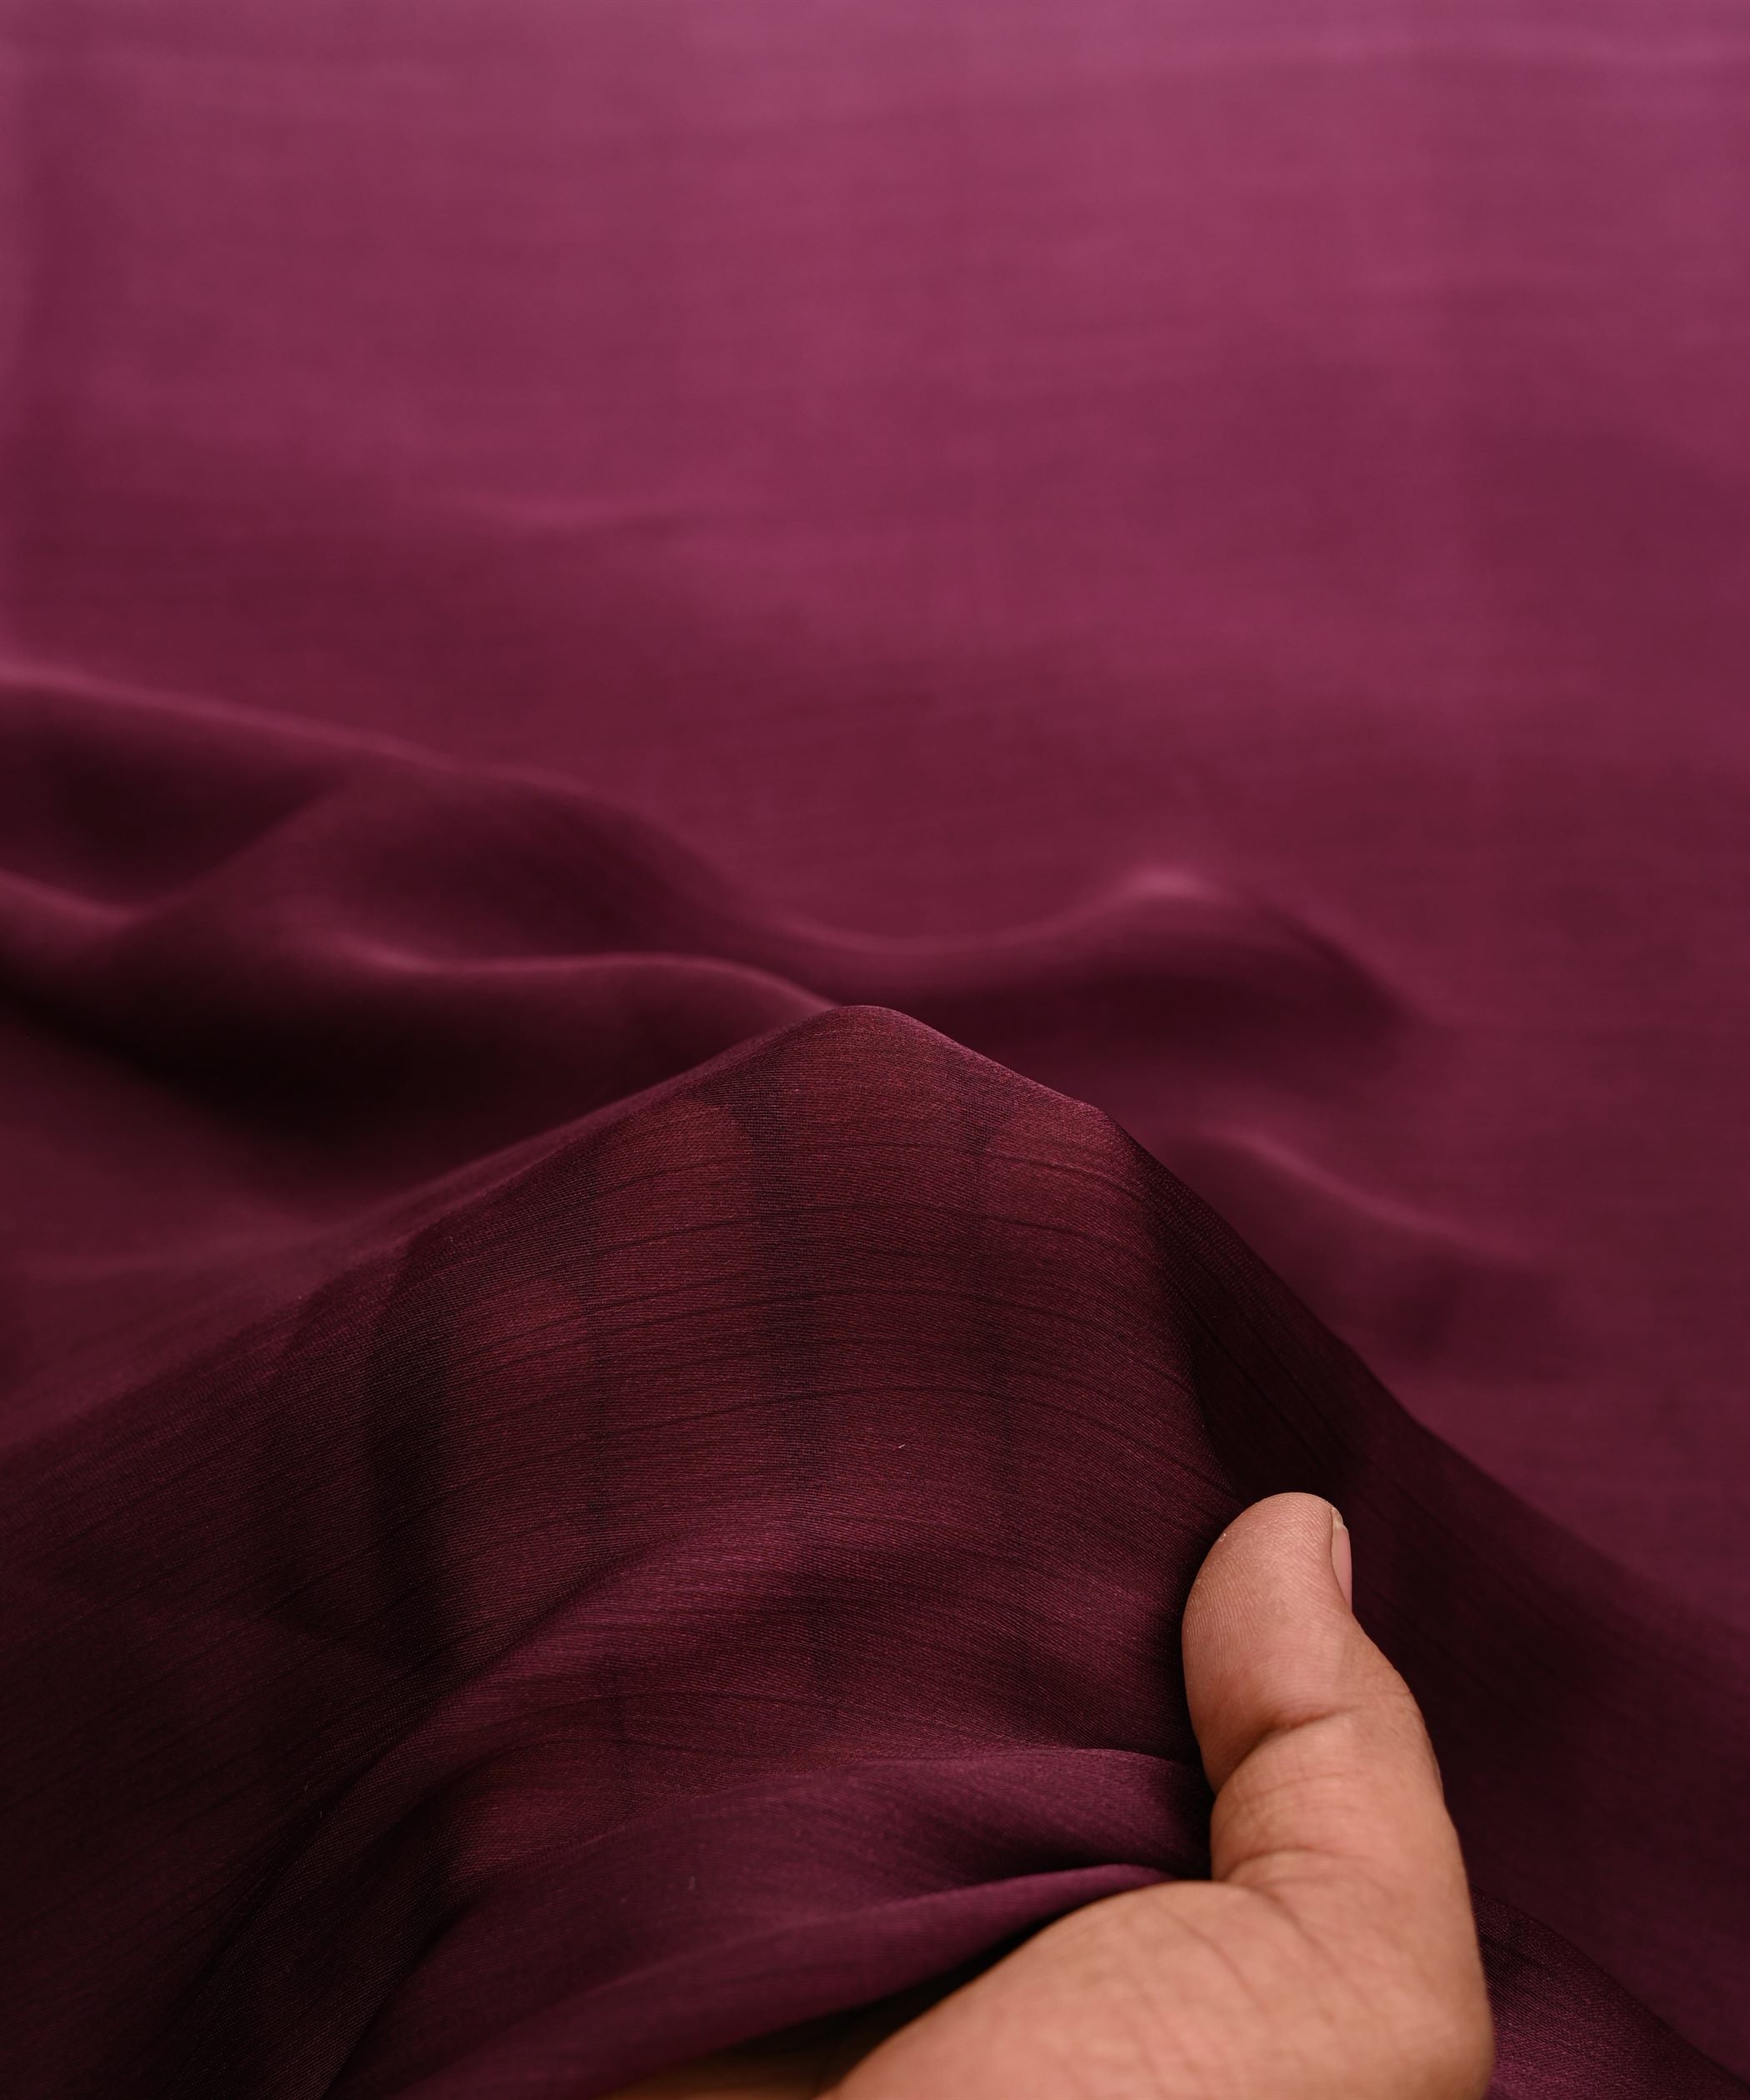 Wine Plain Dyed Shaded Satin Chiffon Fabric